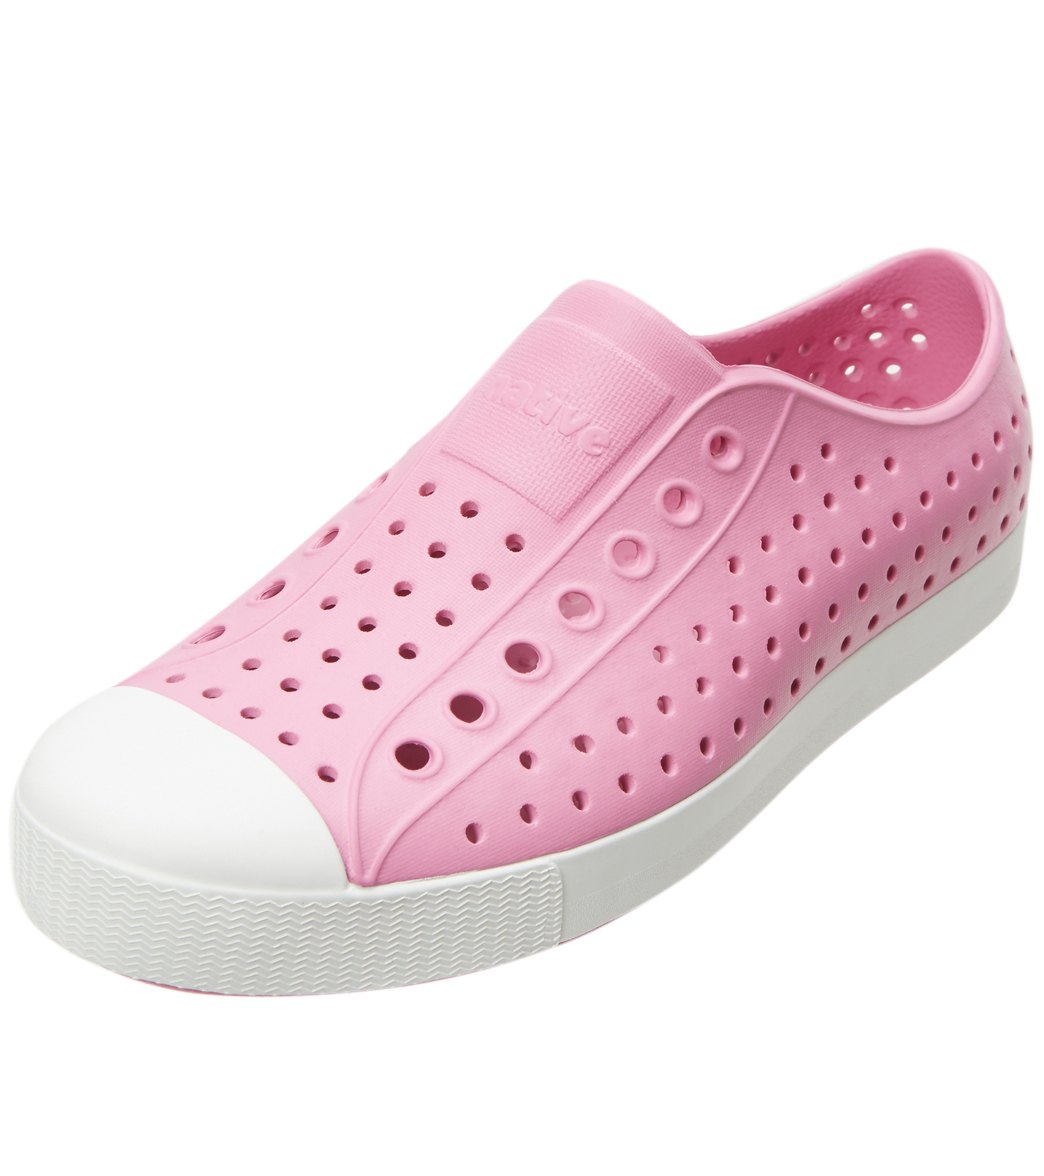 Native Jefferson Water Shoe - Malibu Pink/Shell White M11 Eva/Foam/Rubber - Swimoutlet.com